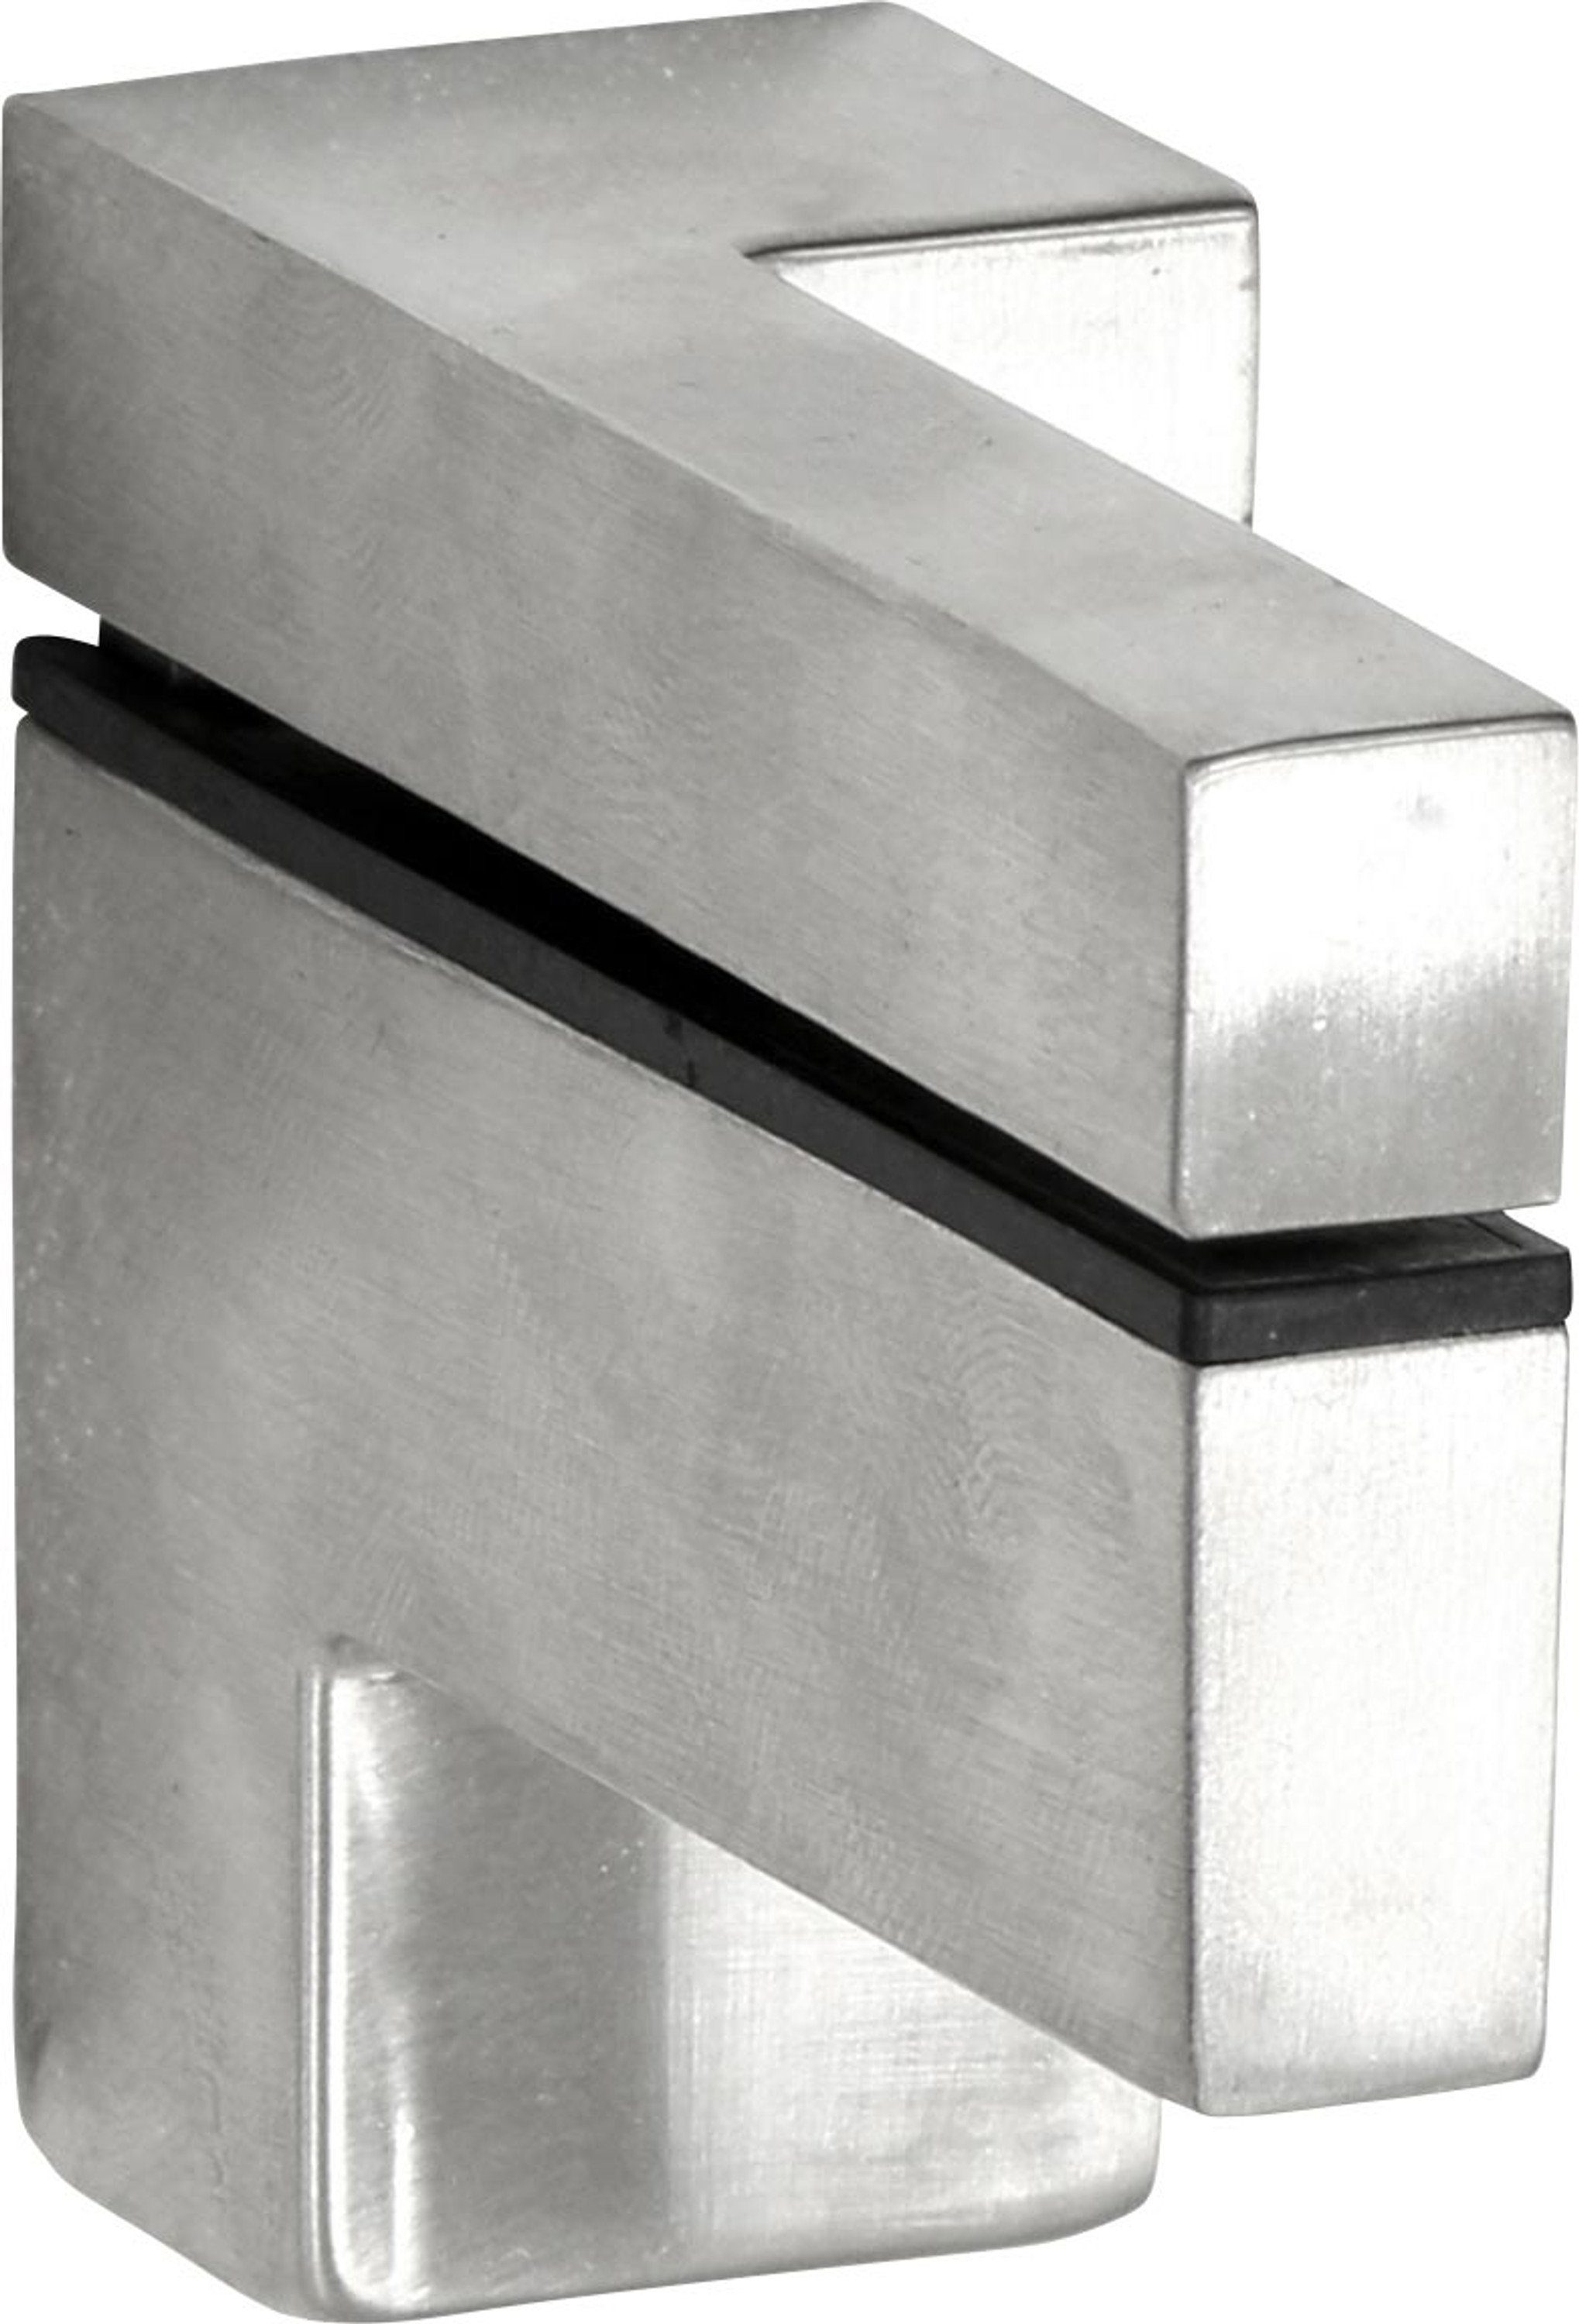 Clip cm 40 ESG-Sicherheitsglas - PIAZZA, Glasregal Glasboden style 10mm 15 + klar ib x aus Wandregal Wandregal